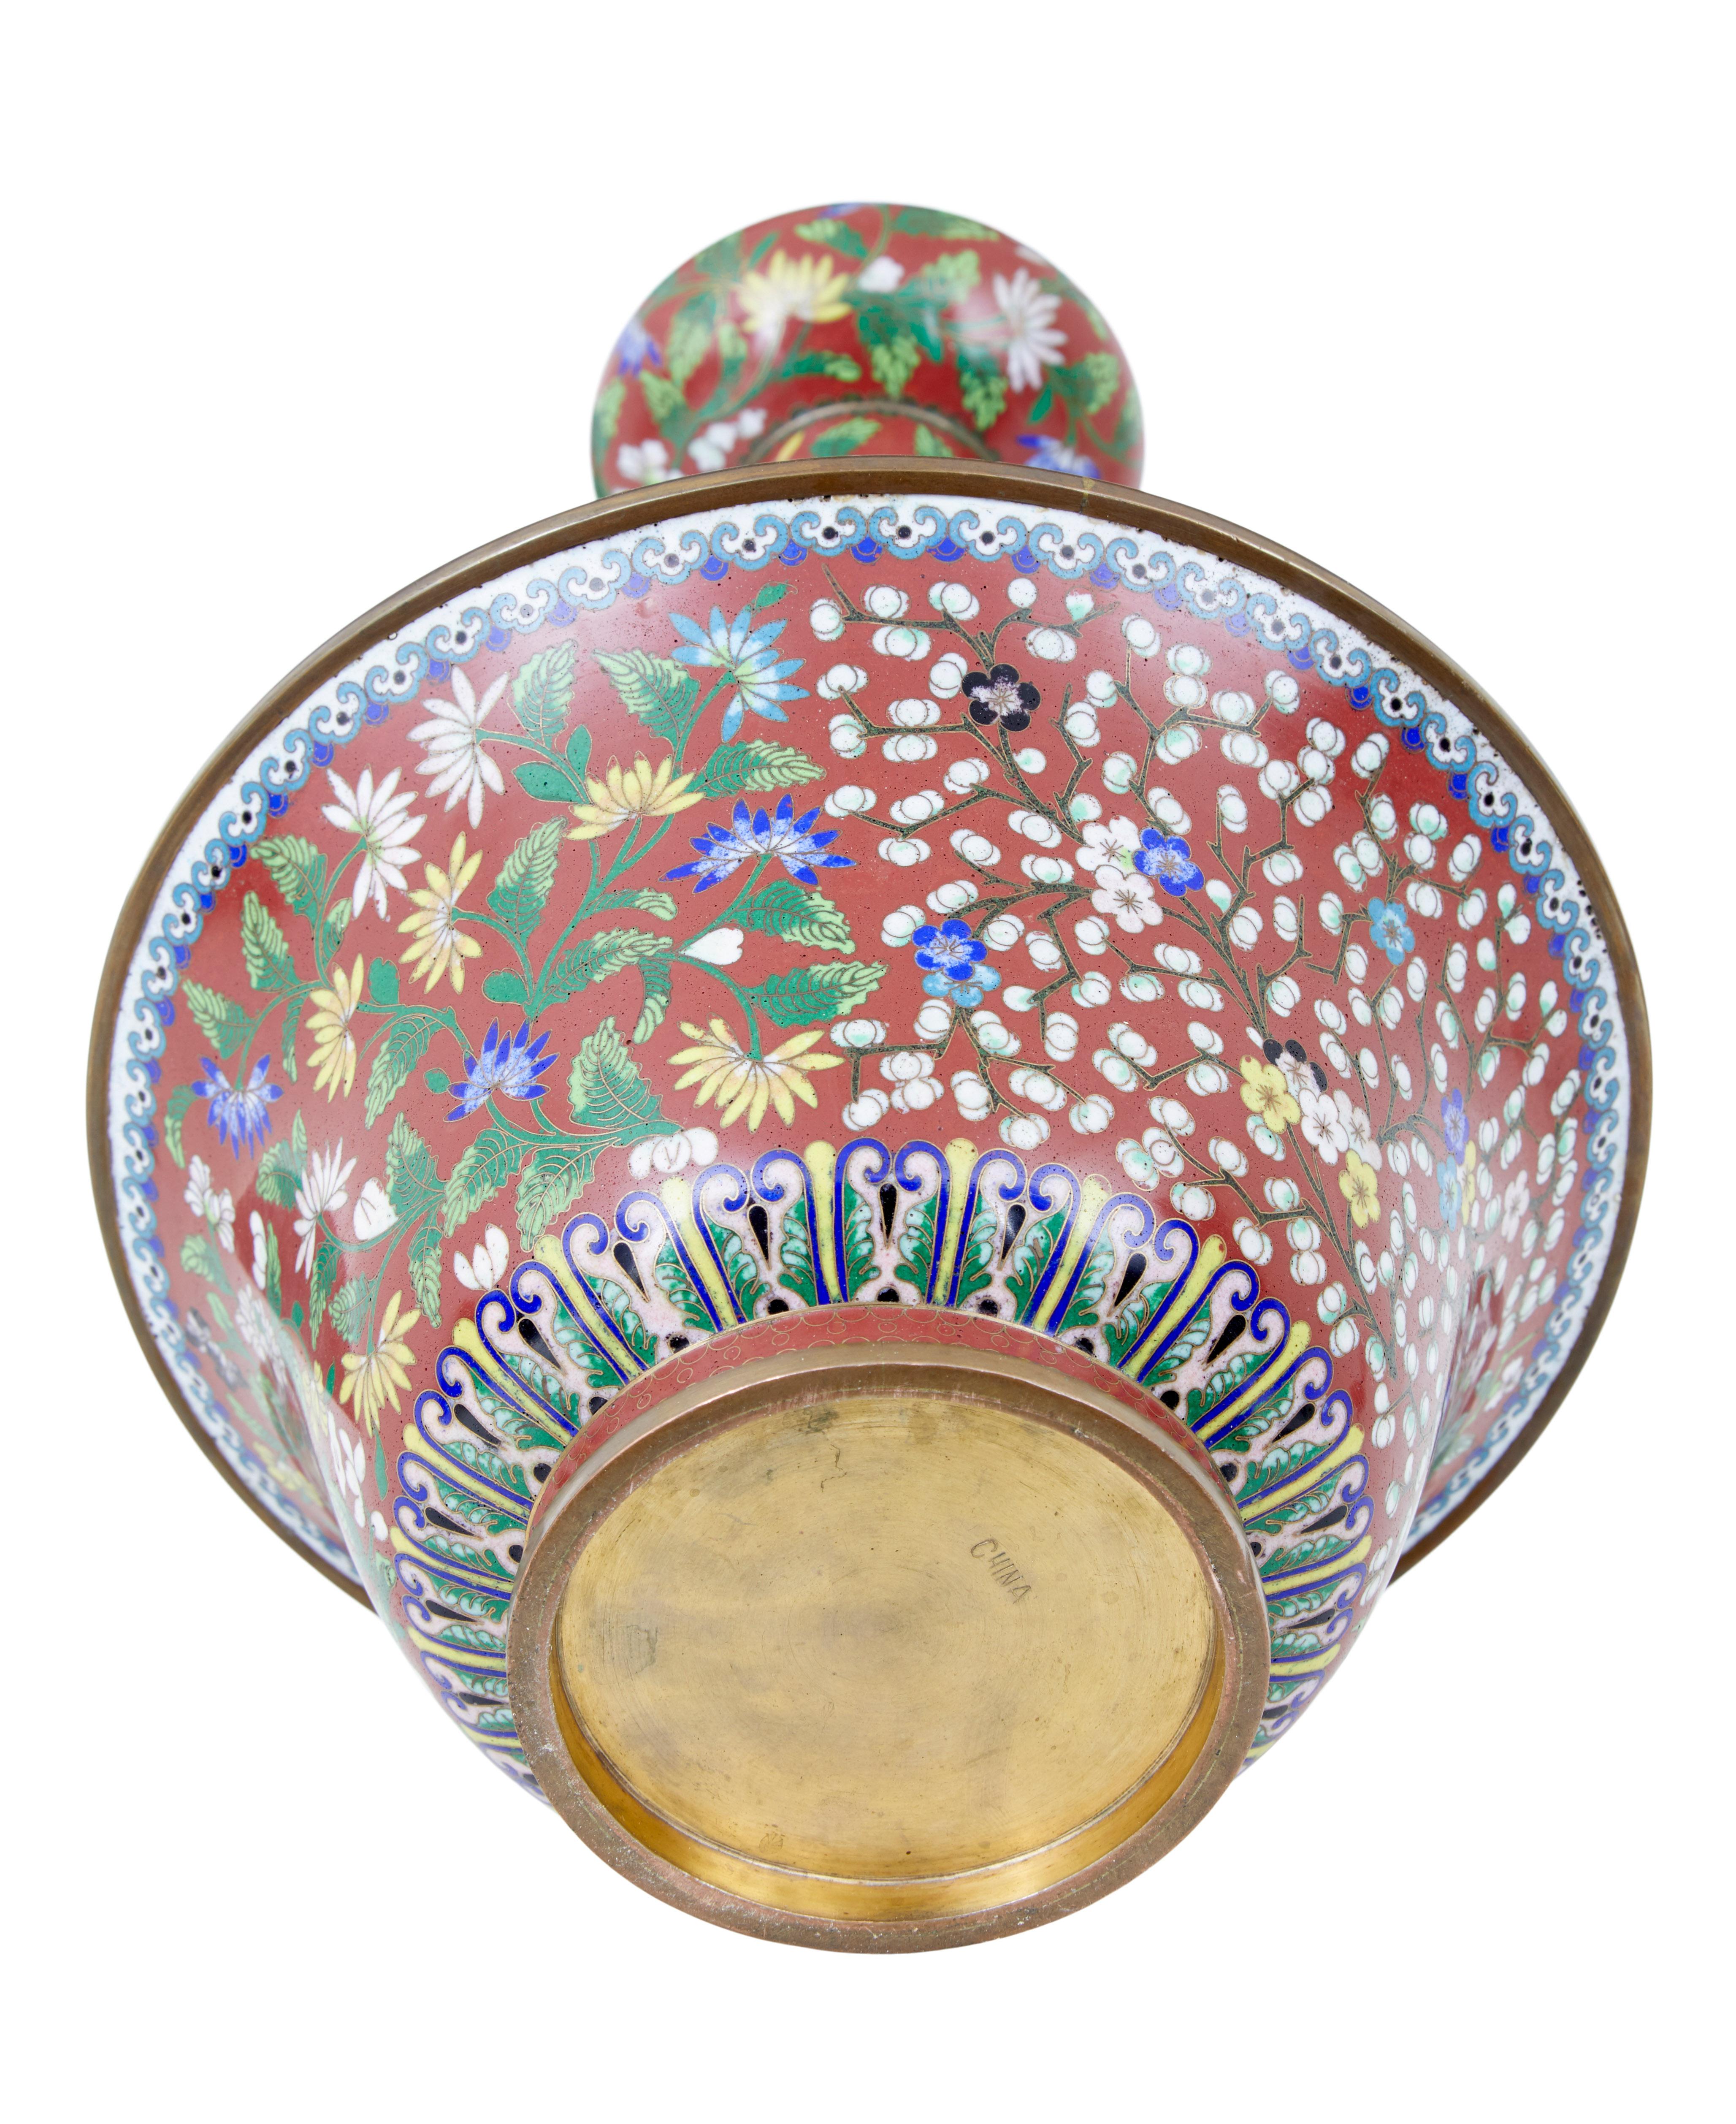 Chinese Export Early 20th Century Cloisonne Enamel Vase